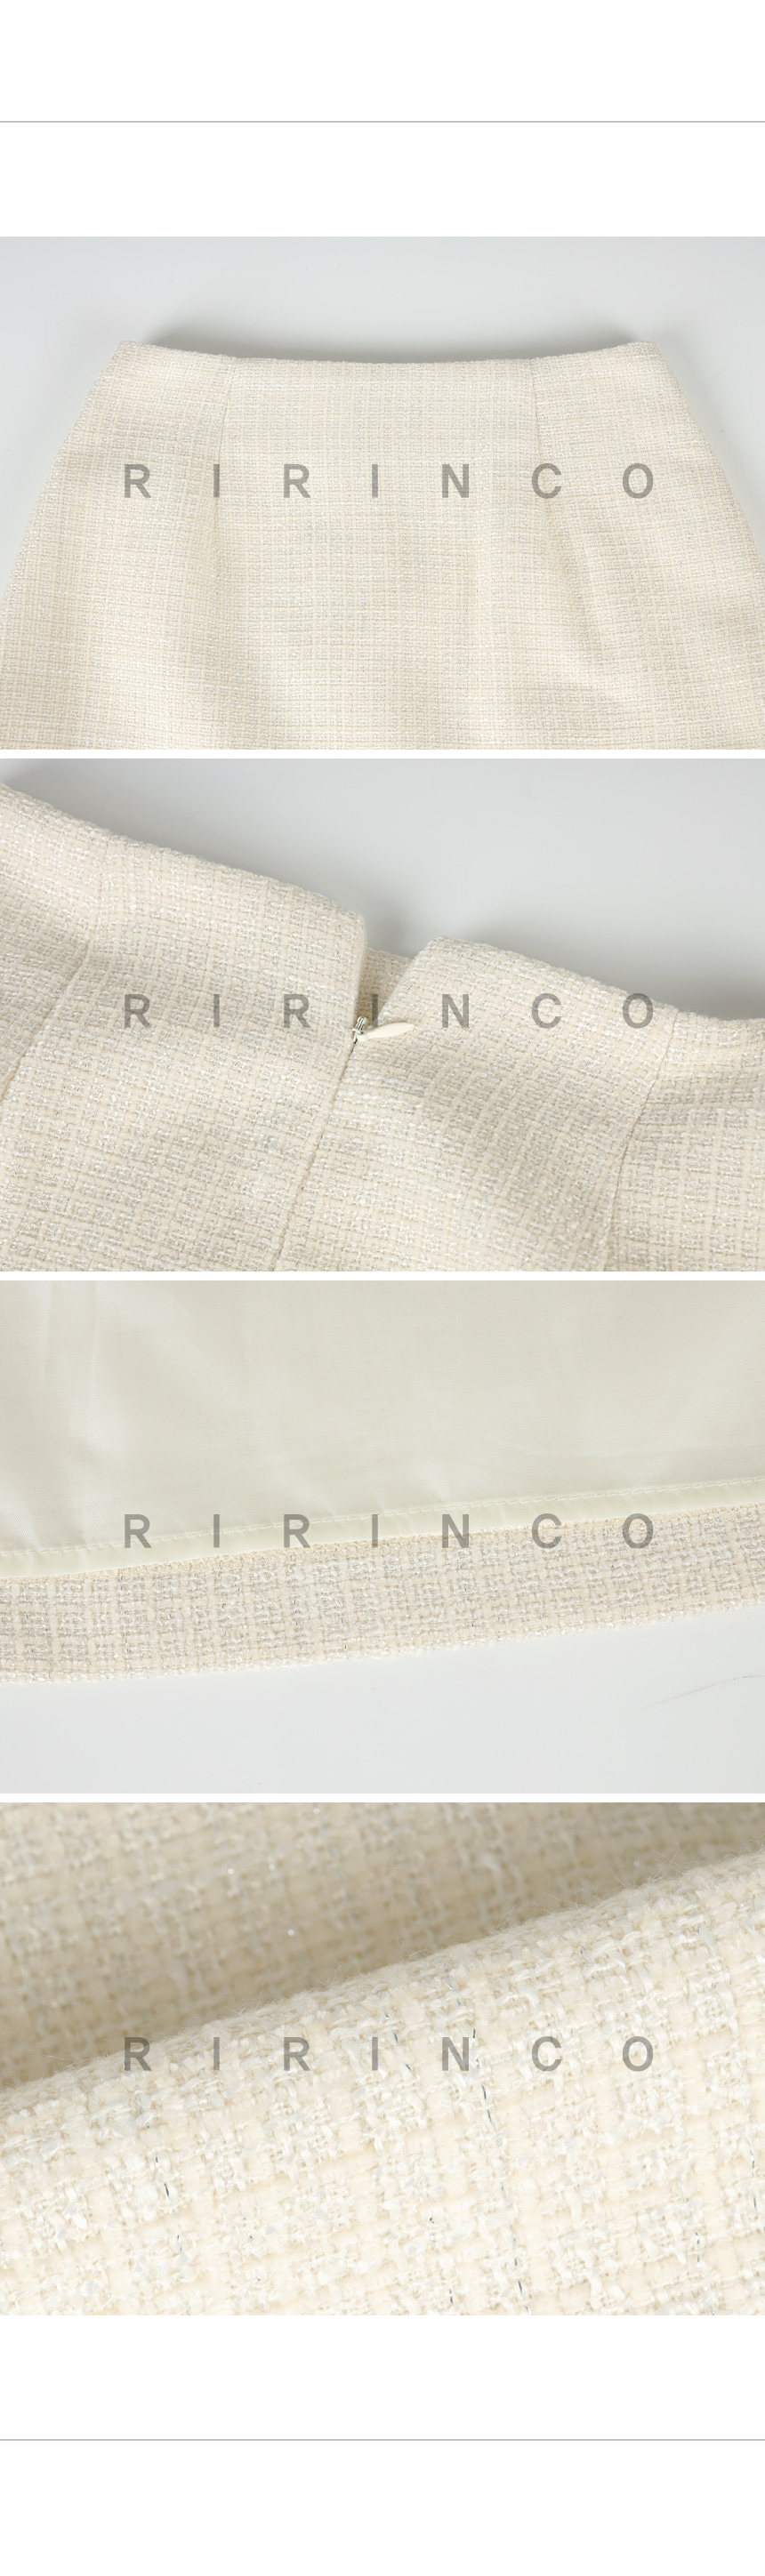 RIRINCO ツーピースツイードミニスカート